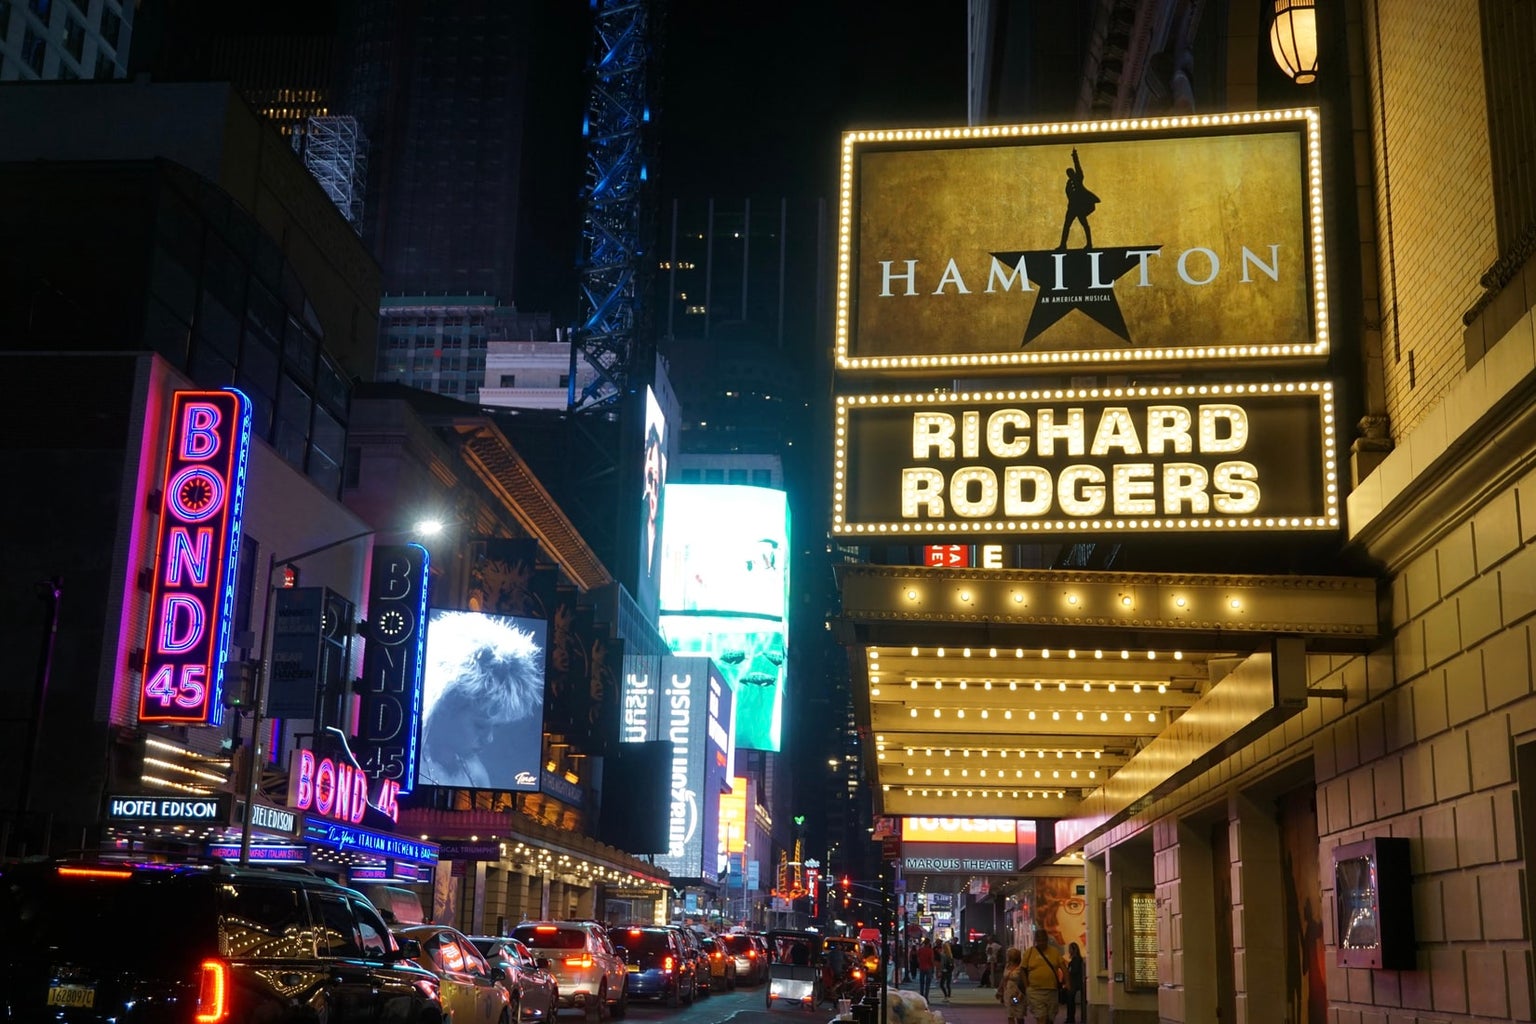 Hamilton at the Richard Rogers theater